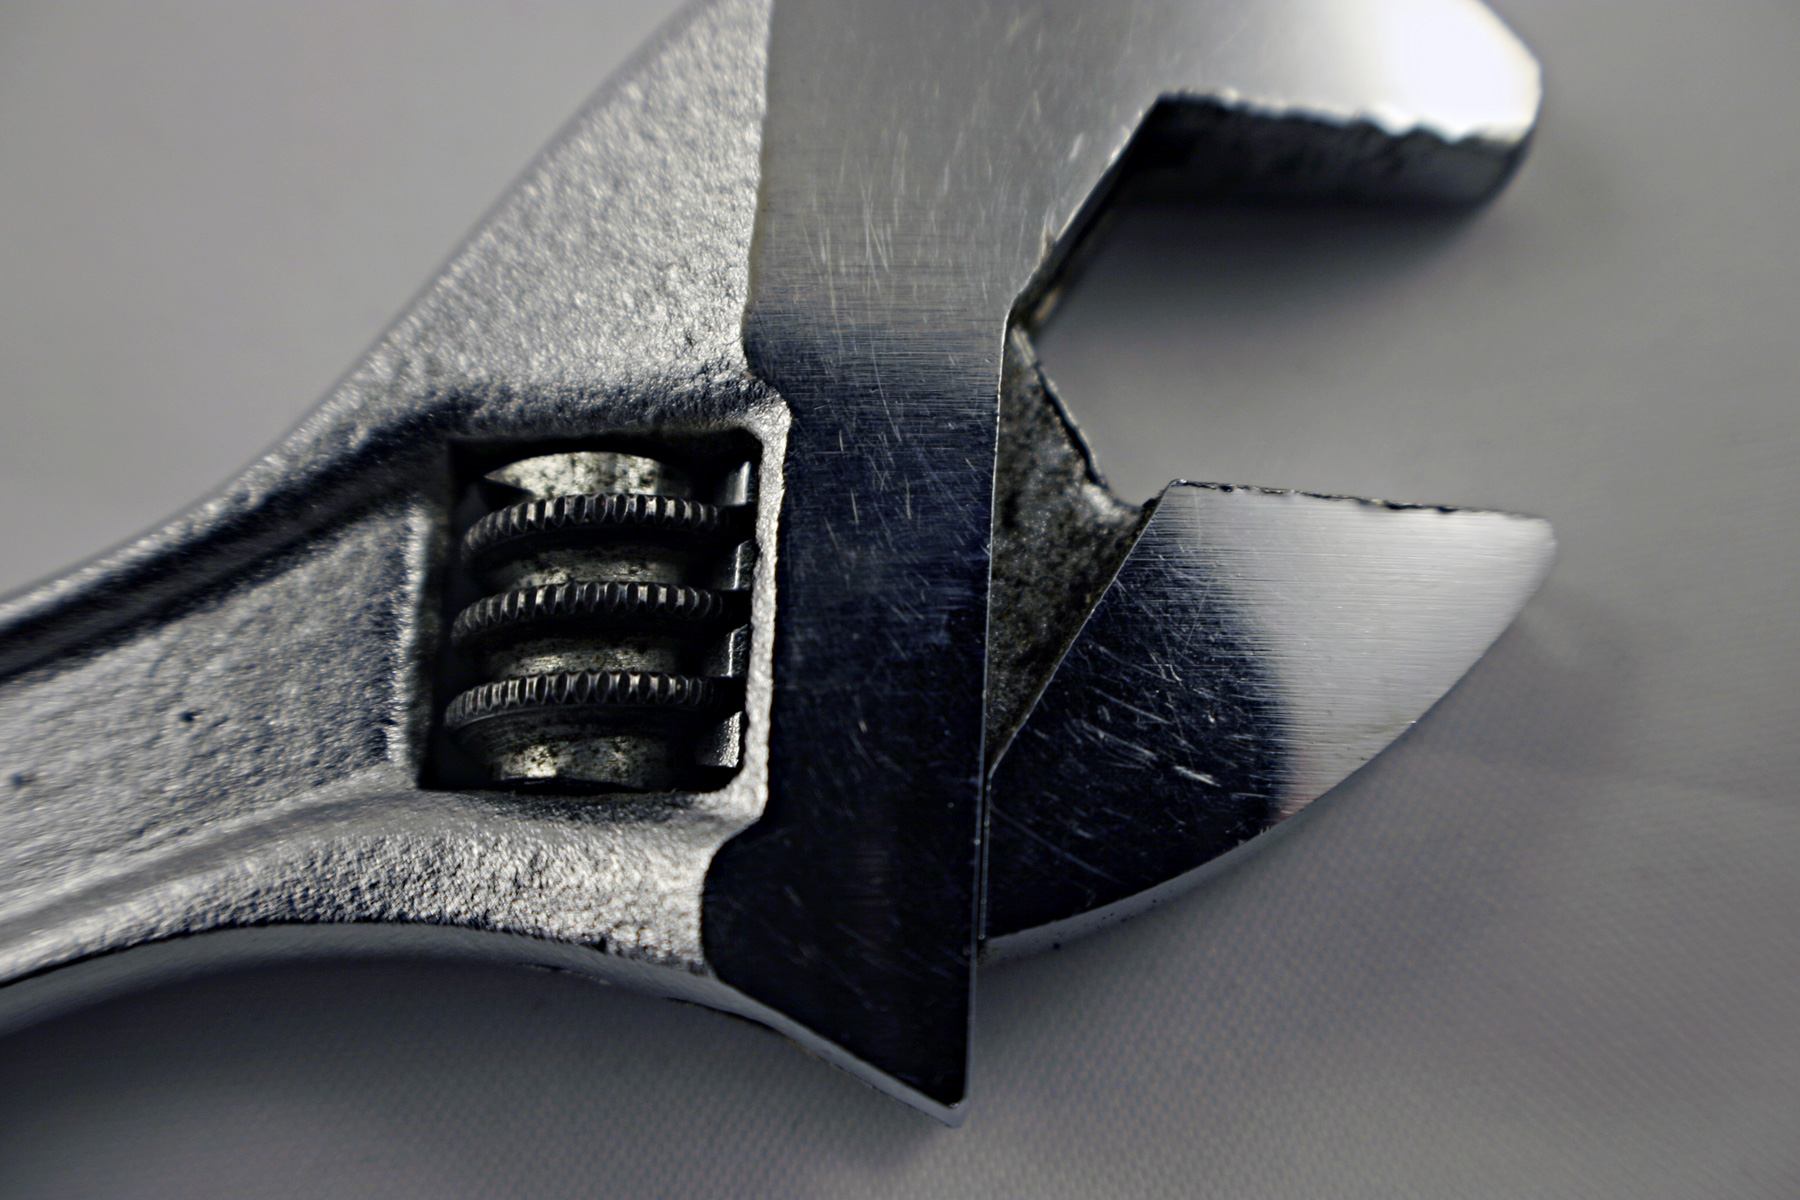 Adjustable steel wrench closeup photo